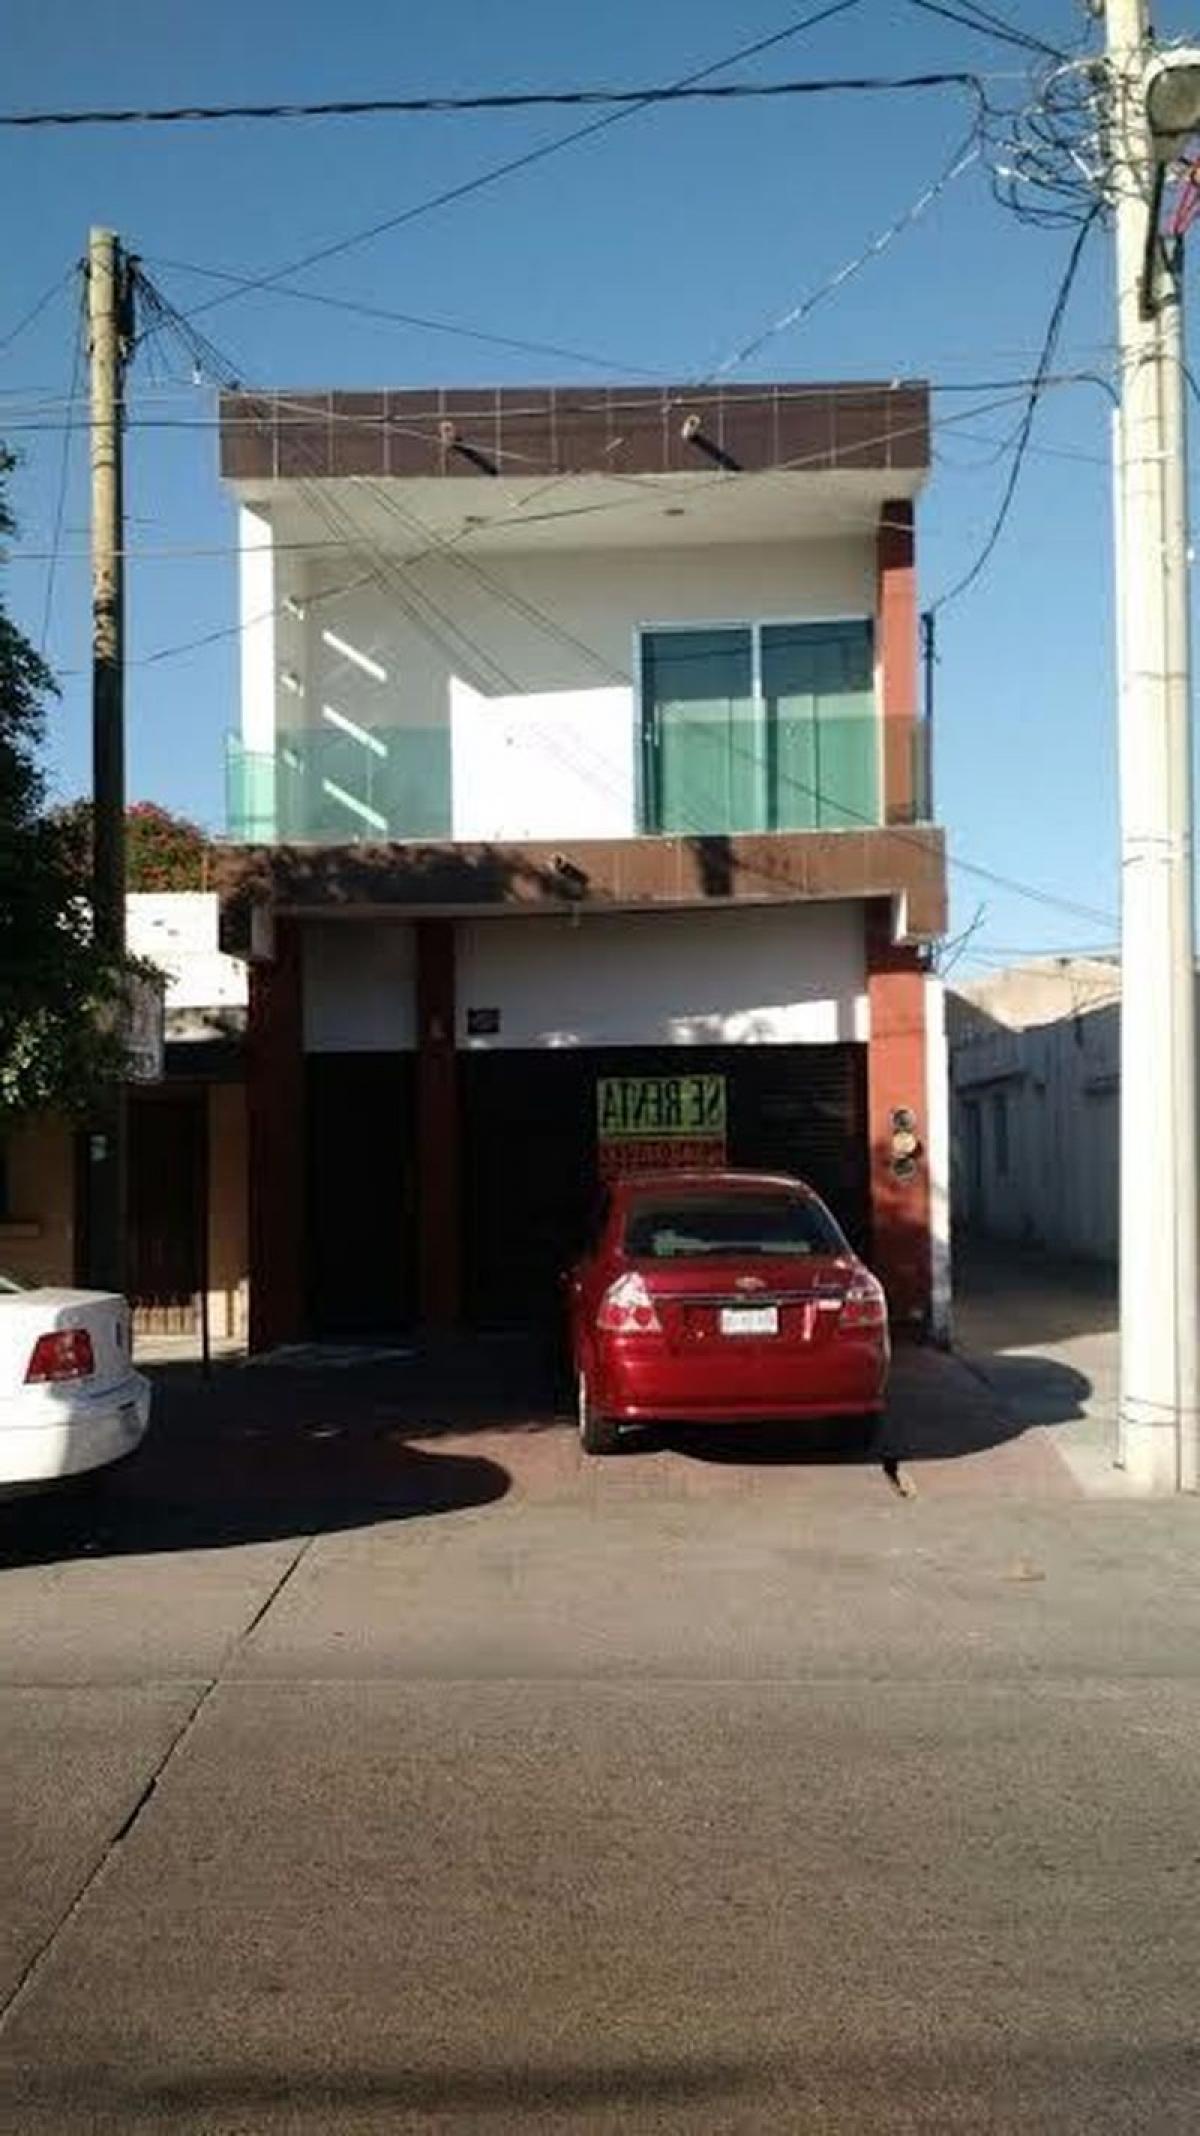 Picture of Apartment Building For Sale in Sinaloa, Sinaloa, Mexico